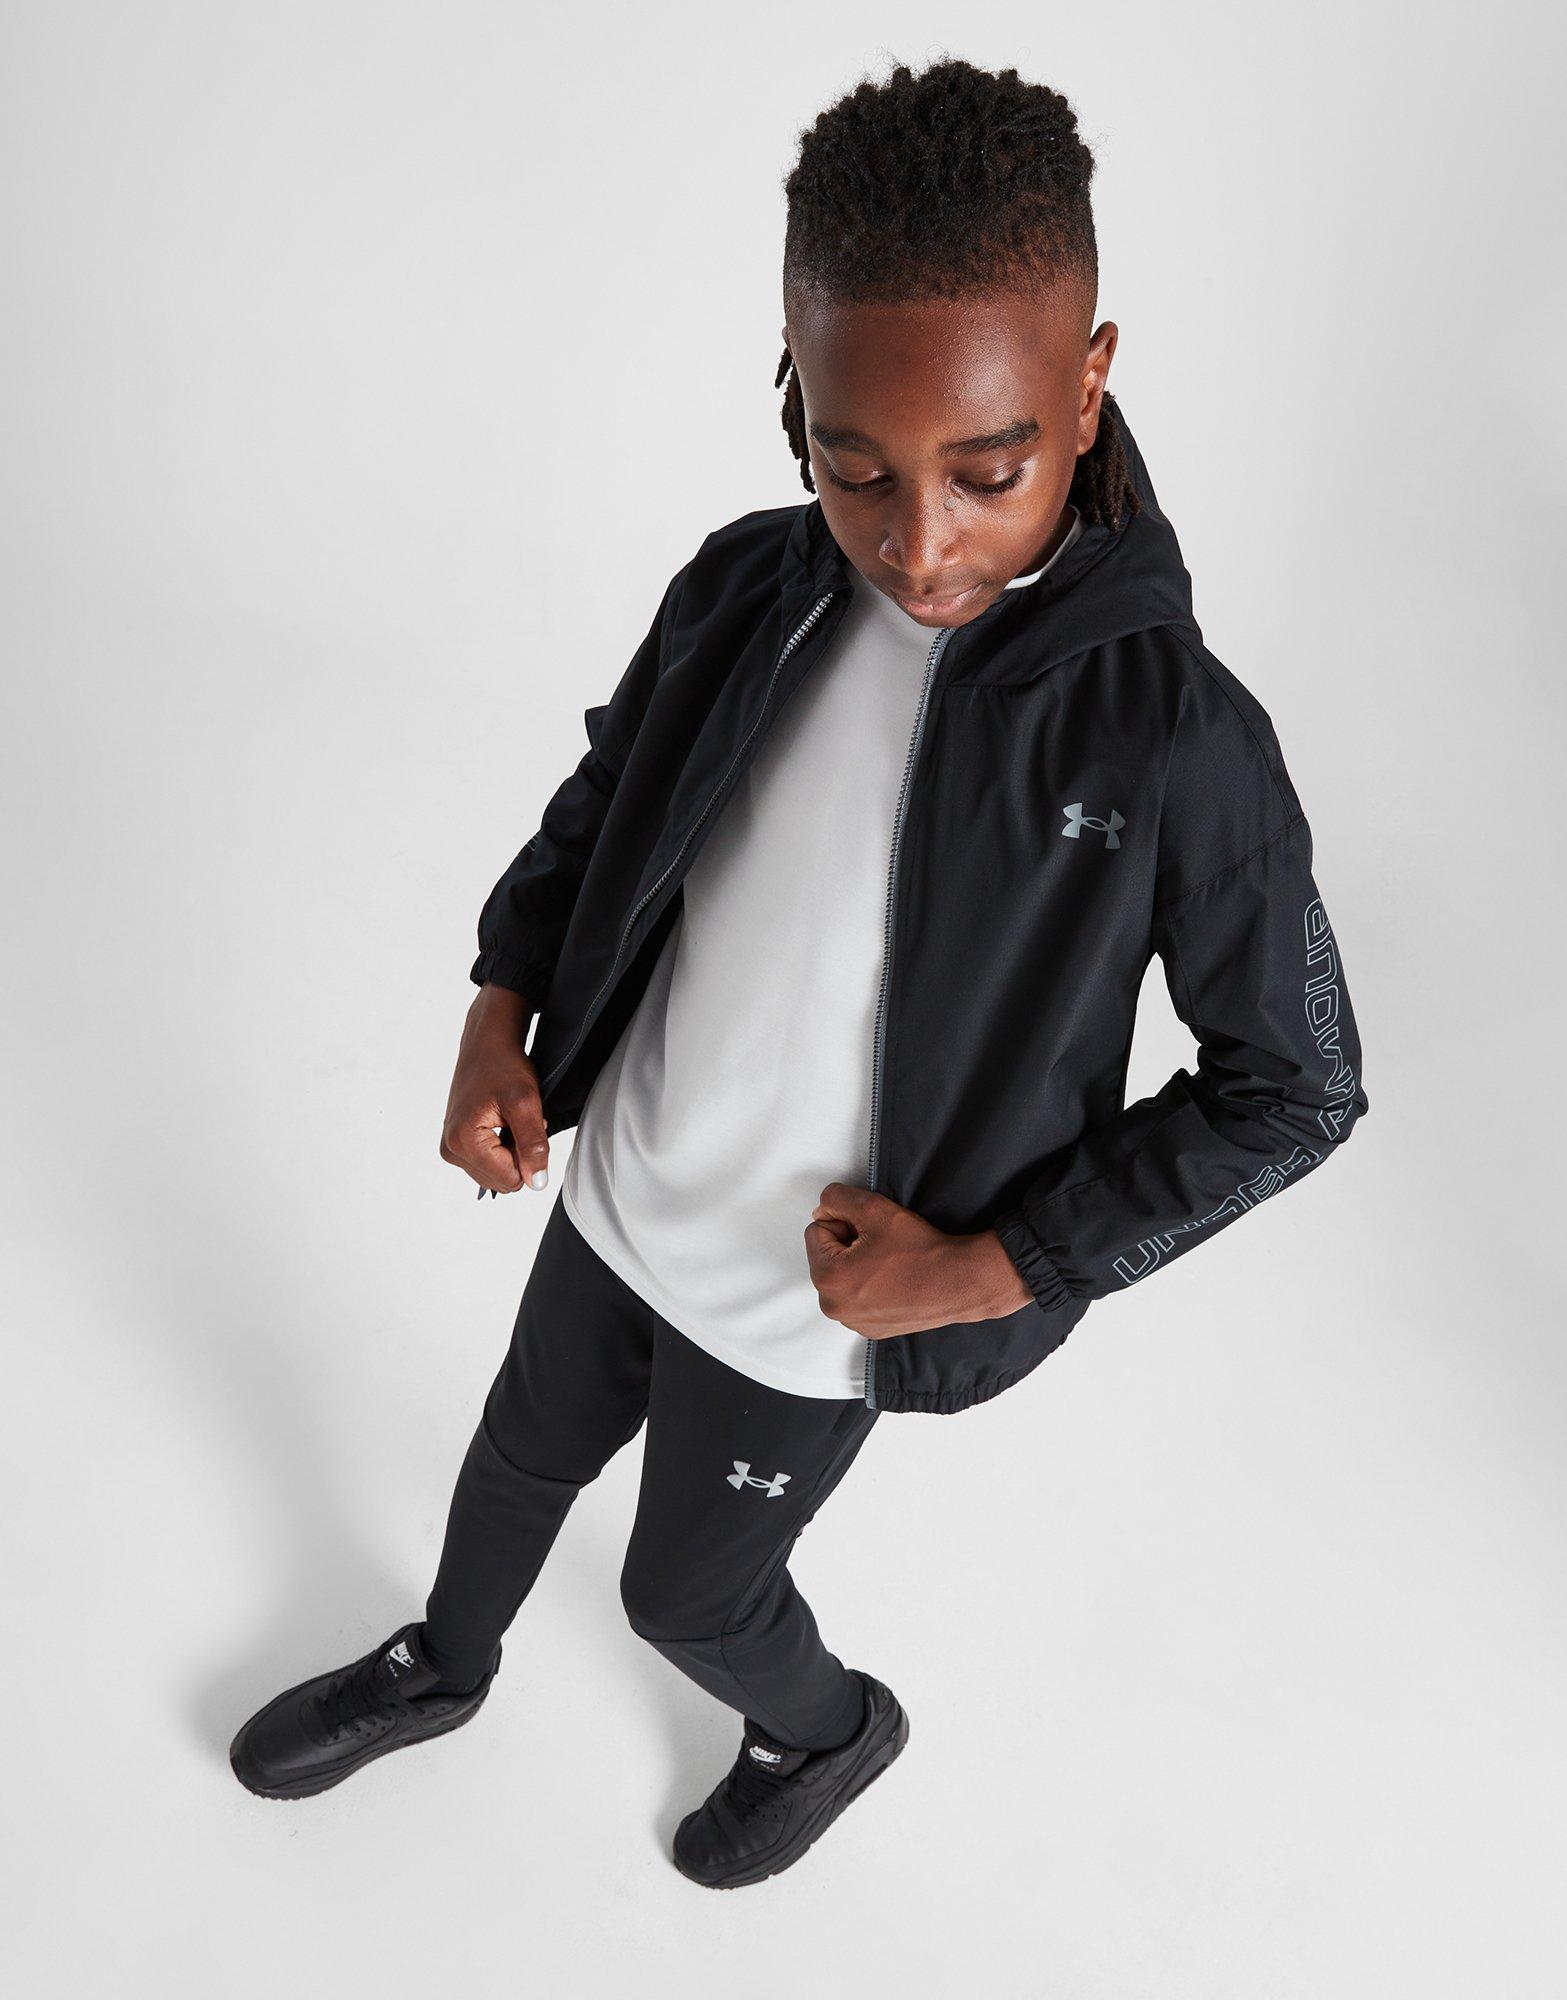 Kids' Under Armour Jackets & Coats - JD Sports UK